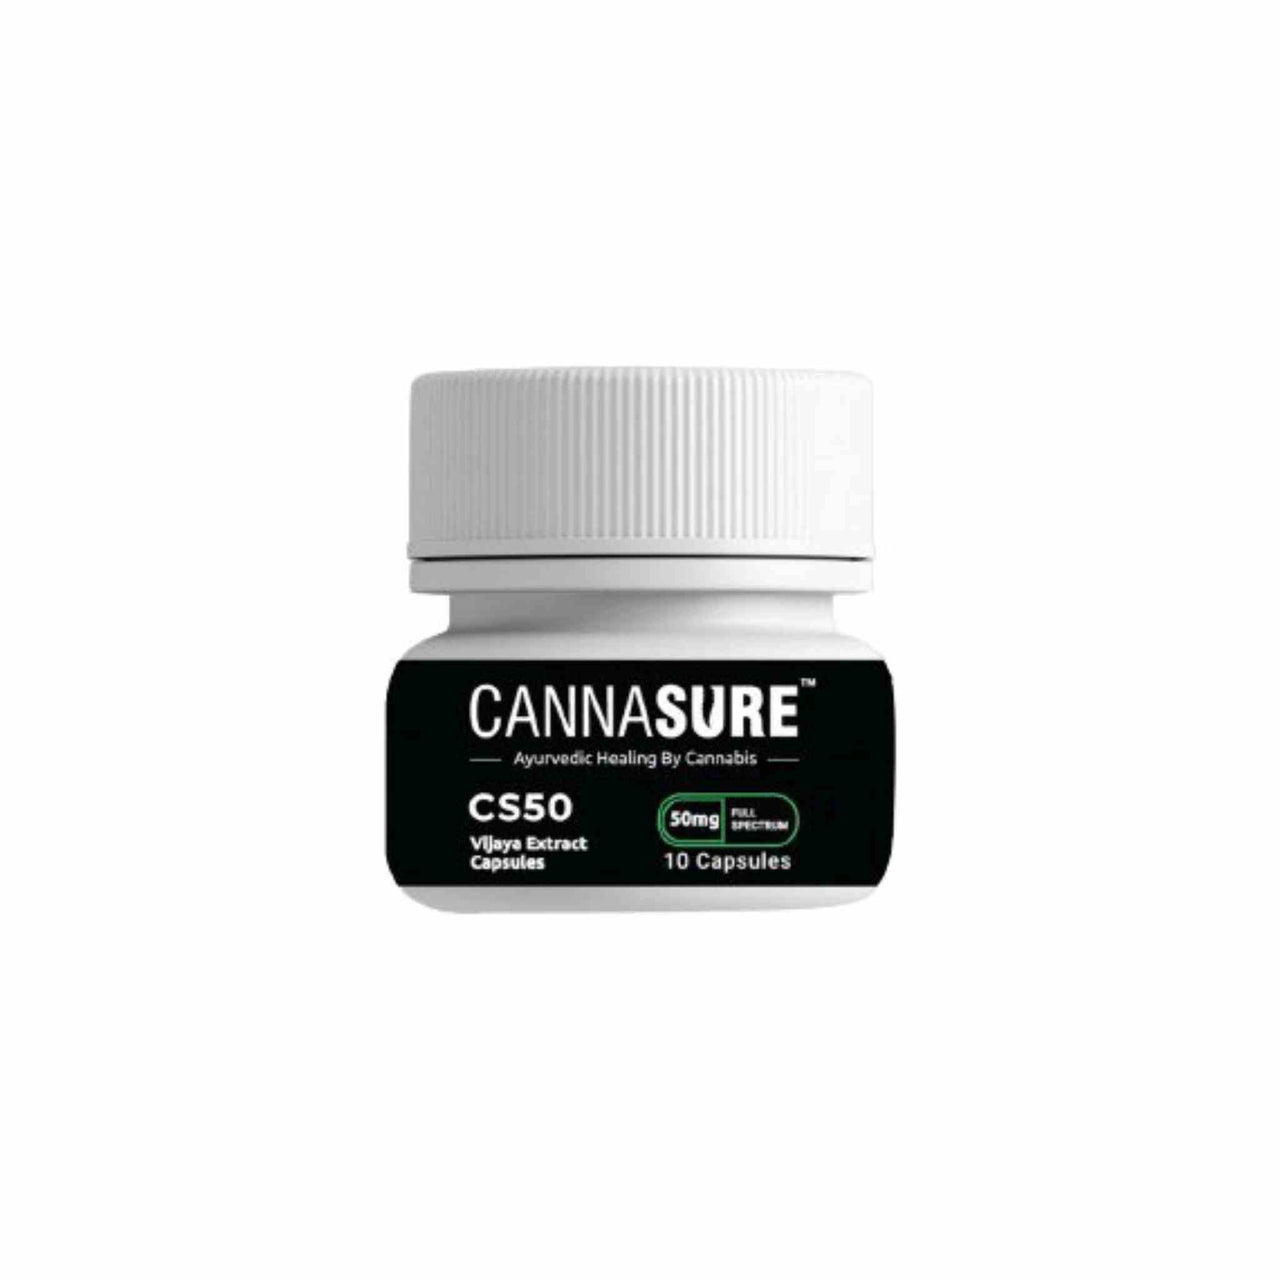 Cannasure CS50 Cannabis Extract Capsule - Full Spectrum (50MG)